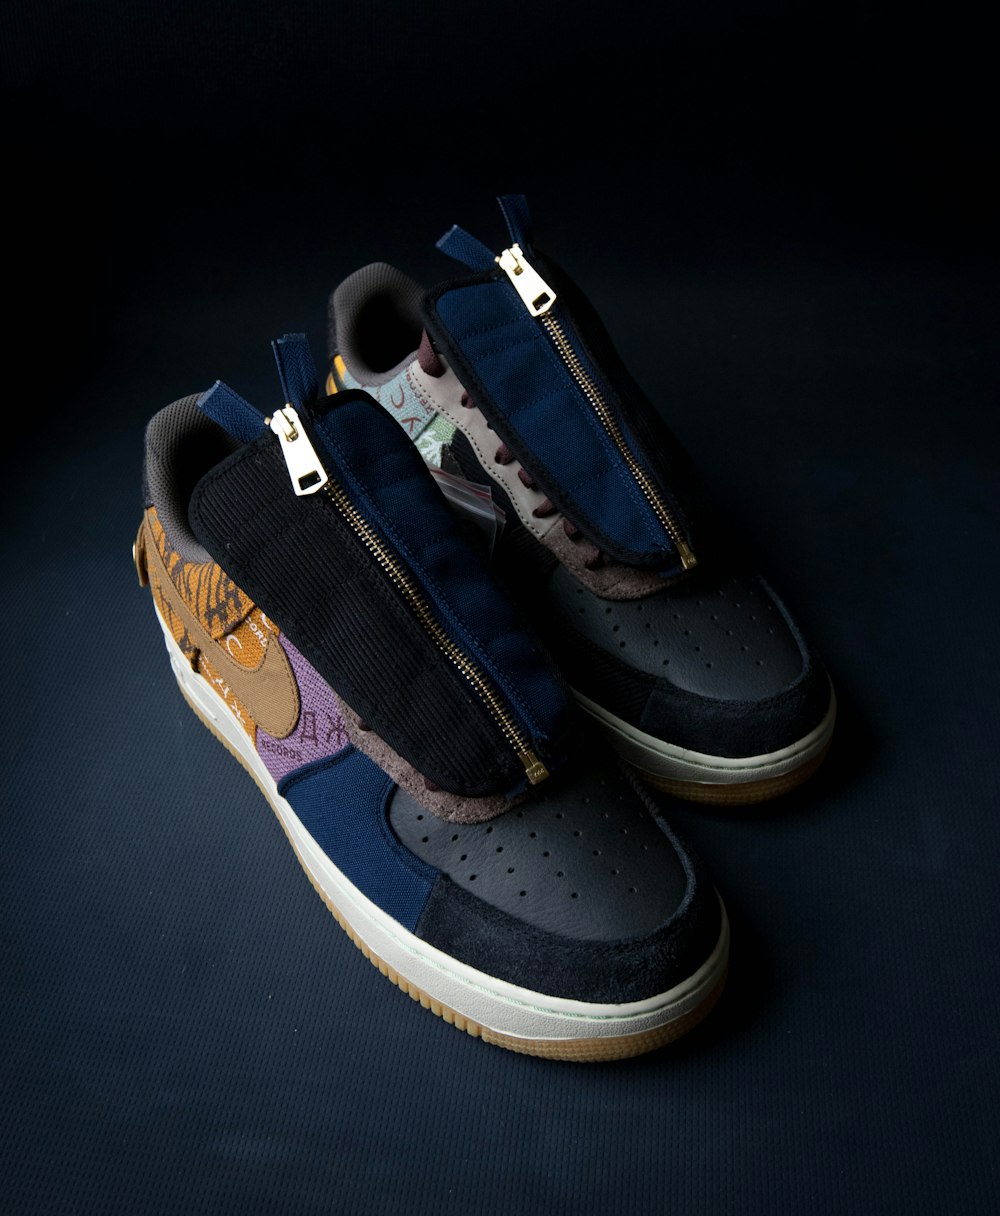 blue-brown-and-black Nike front-zip sneakers